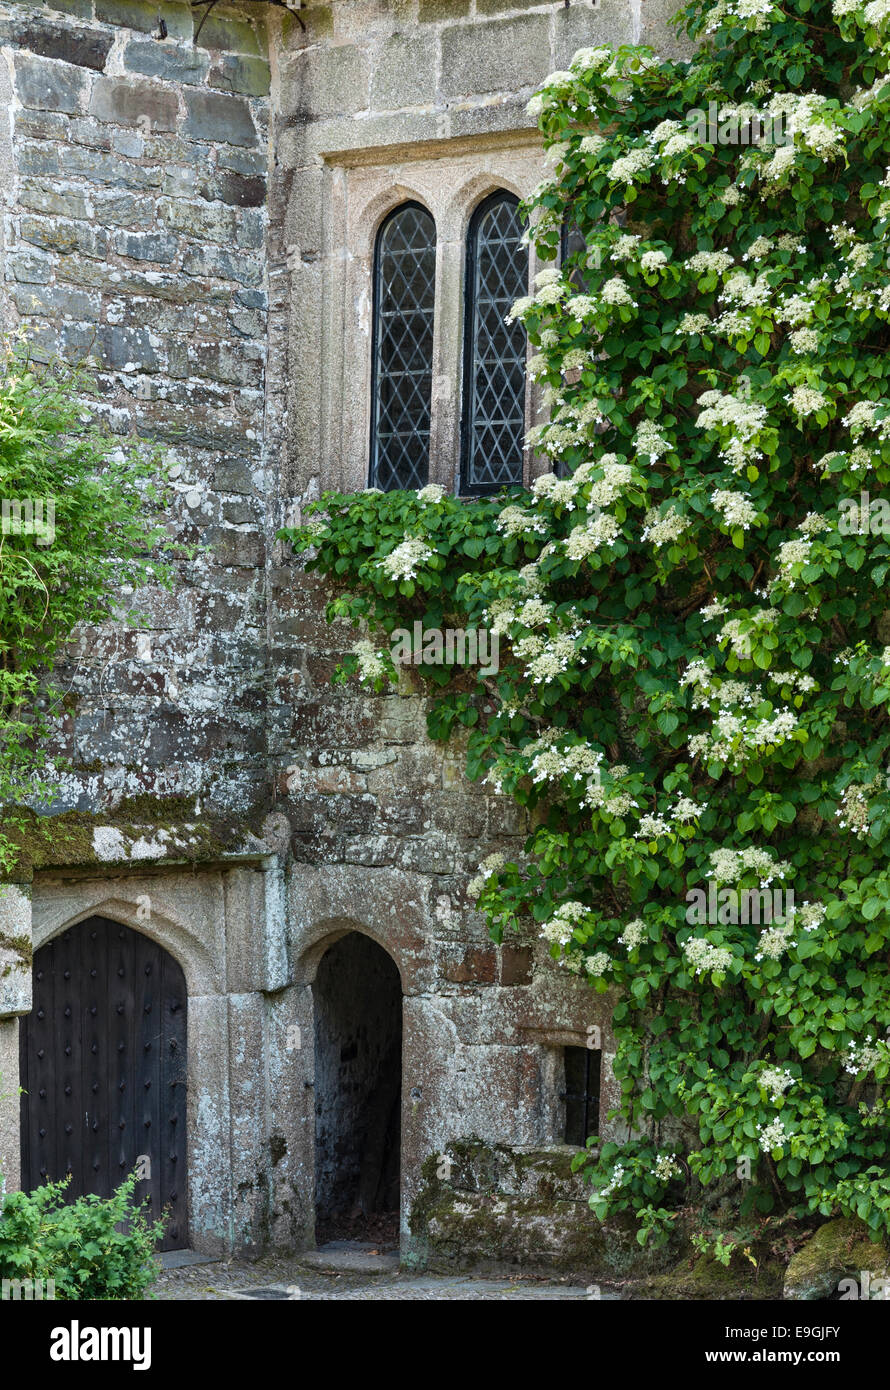 Cotehele, Saltash, Cornwall, UK. A huge climbing hydrangea (hydrangea petiolaris) covering the walls in the medieval courtyard Stock Photo